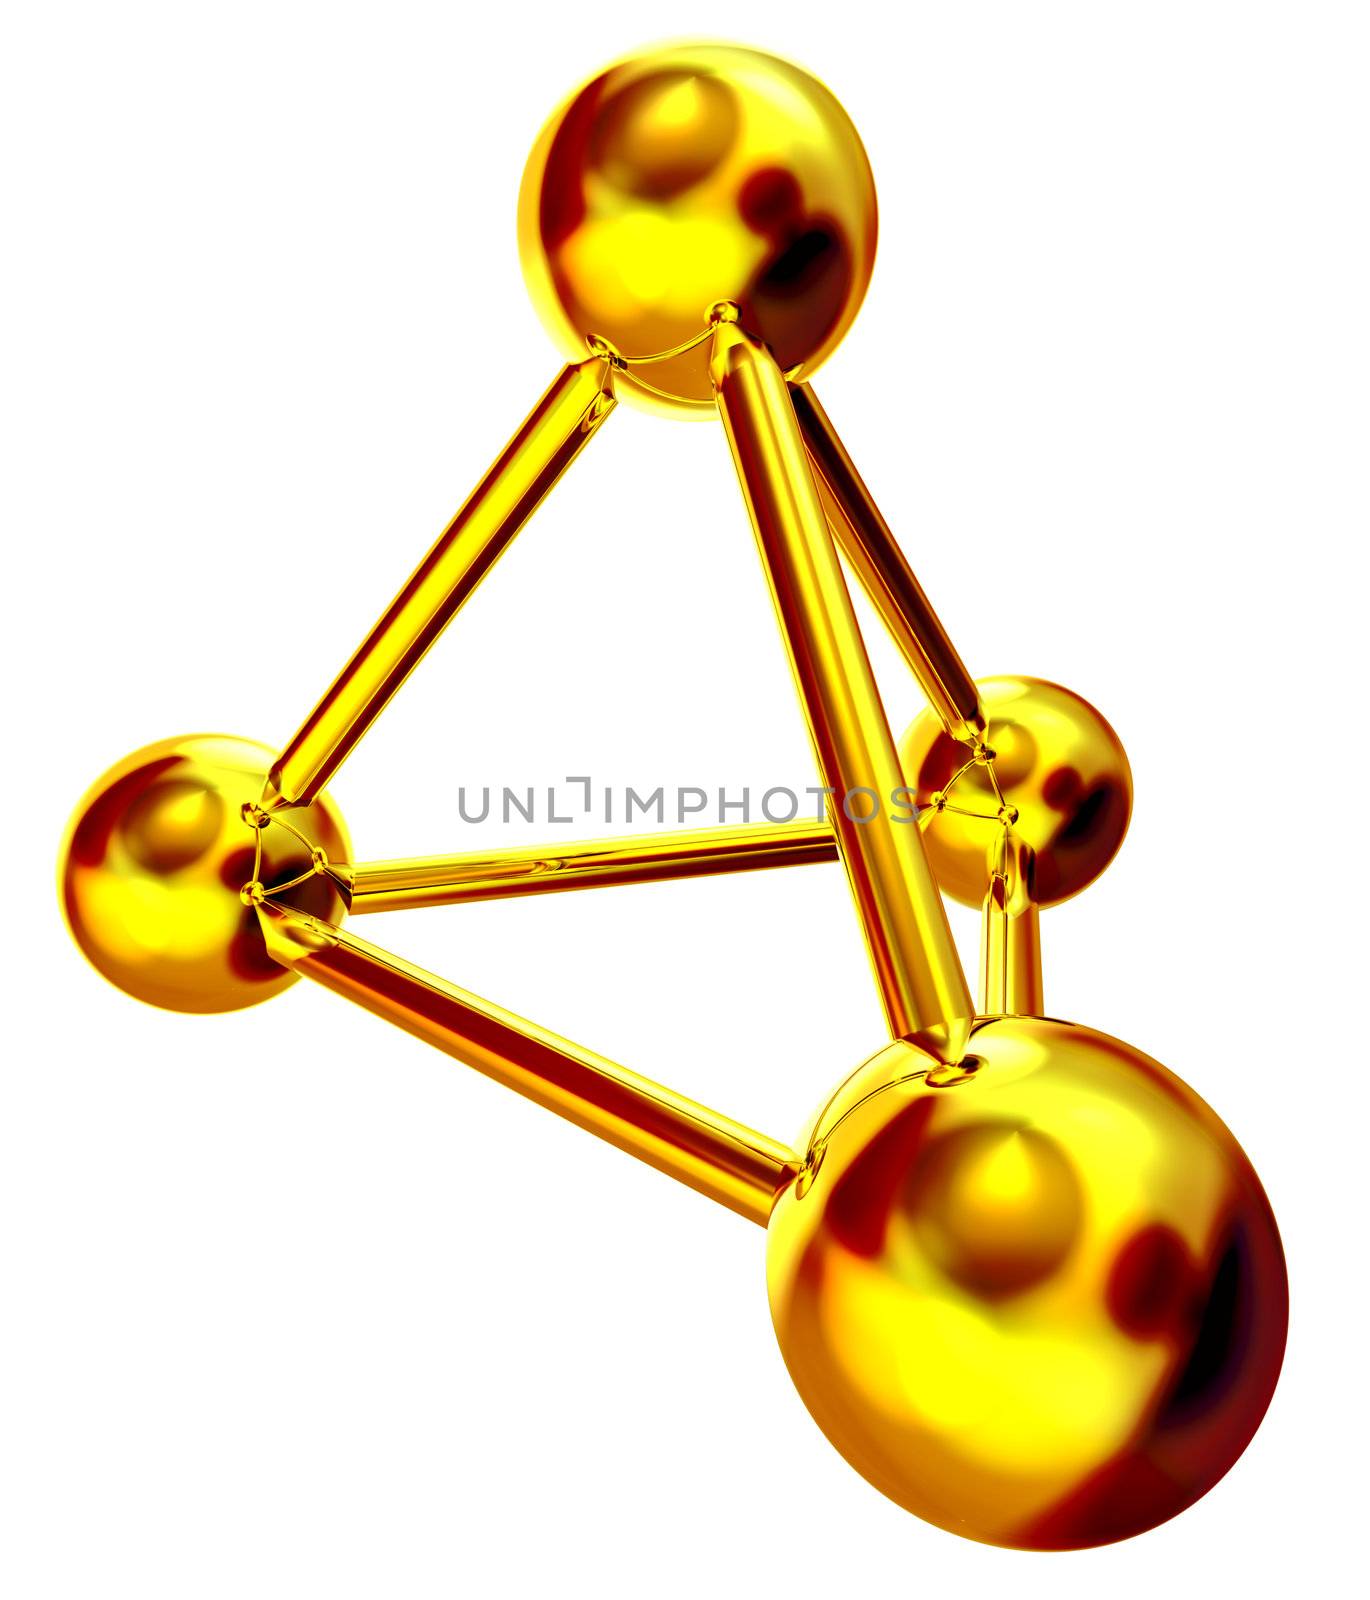 illustration with golden metallic molecule on white background